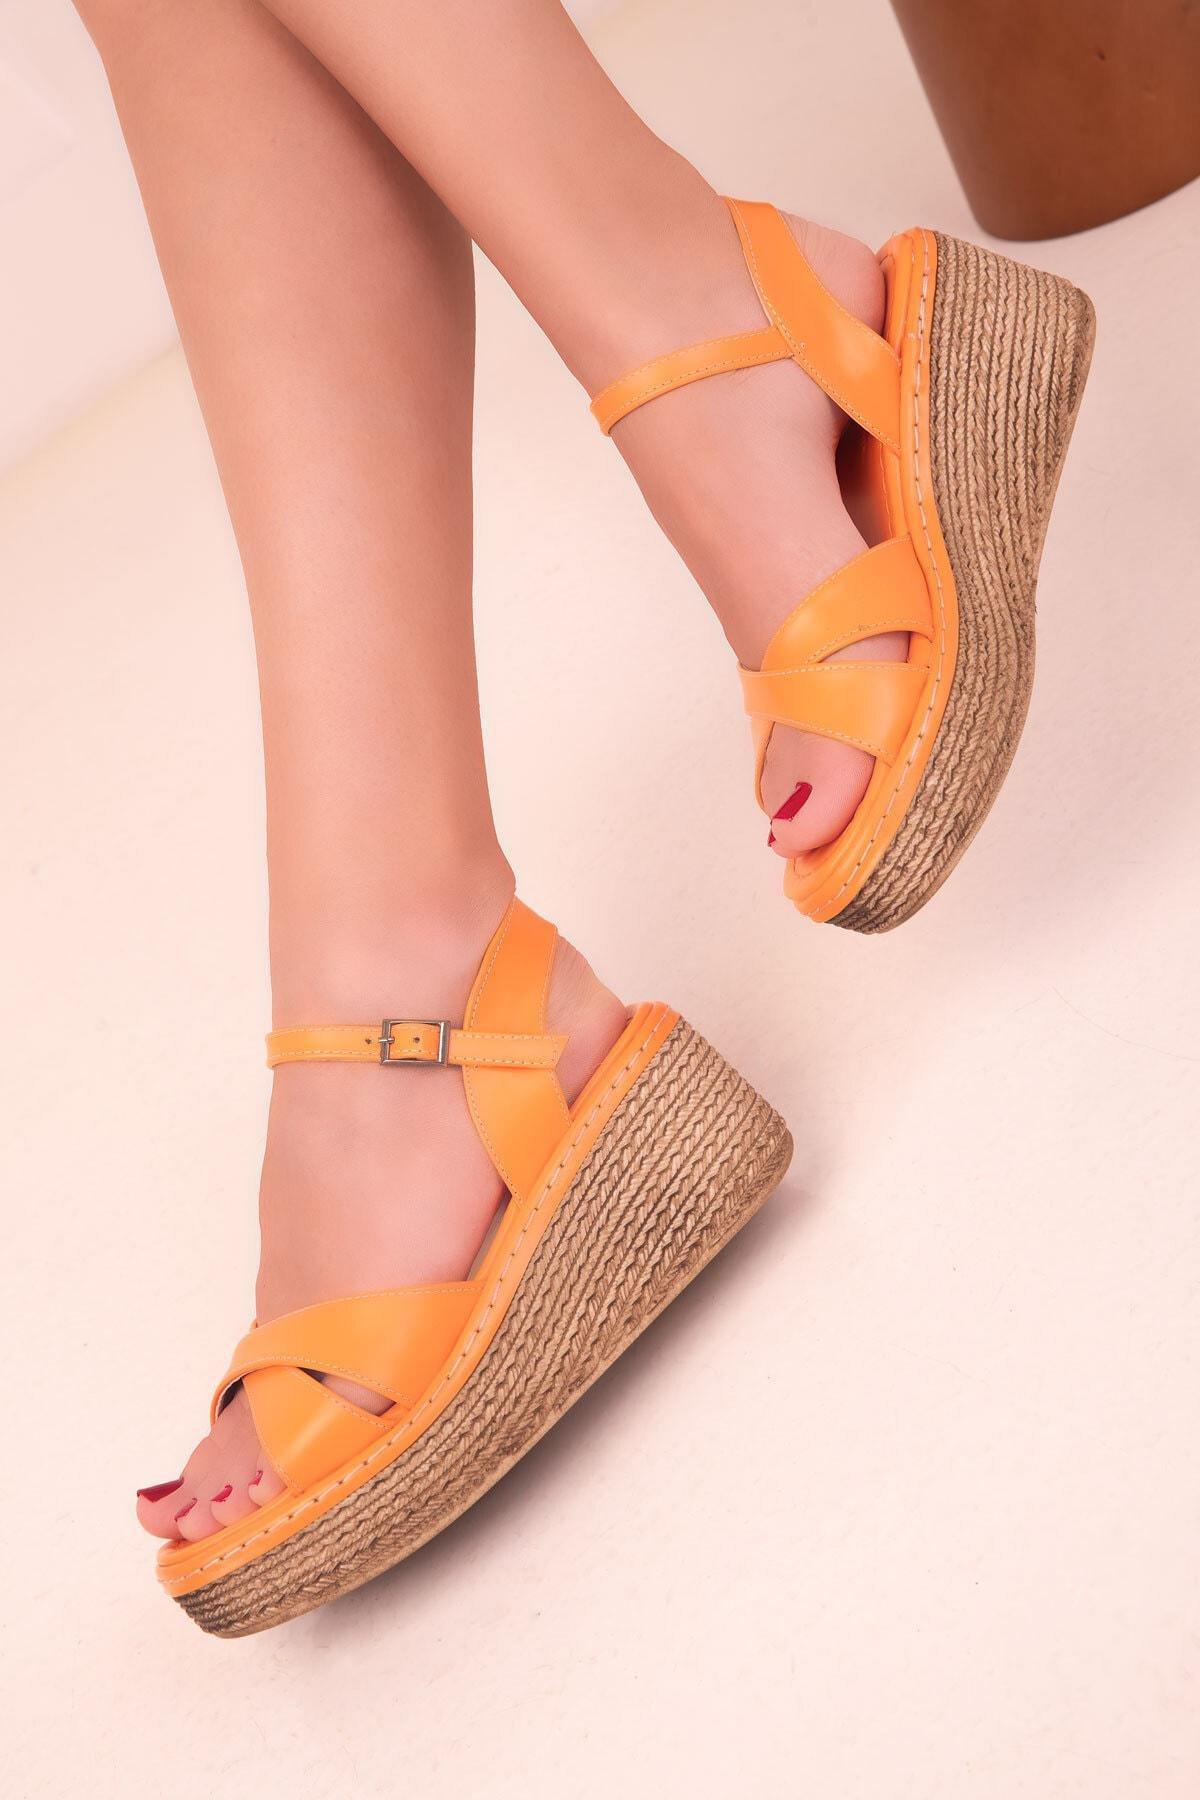 SOHO - Orange Wedge Heels Shoes